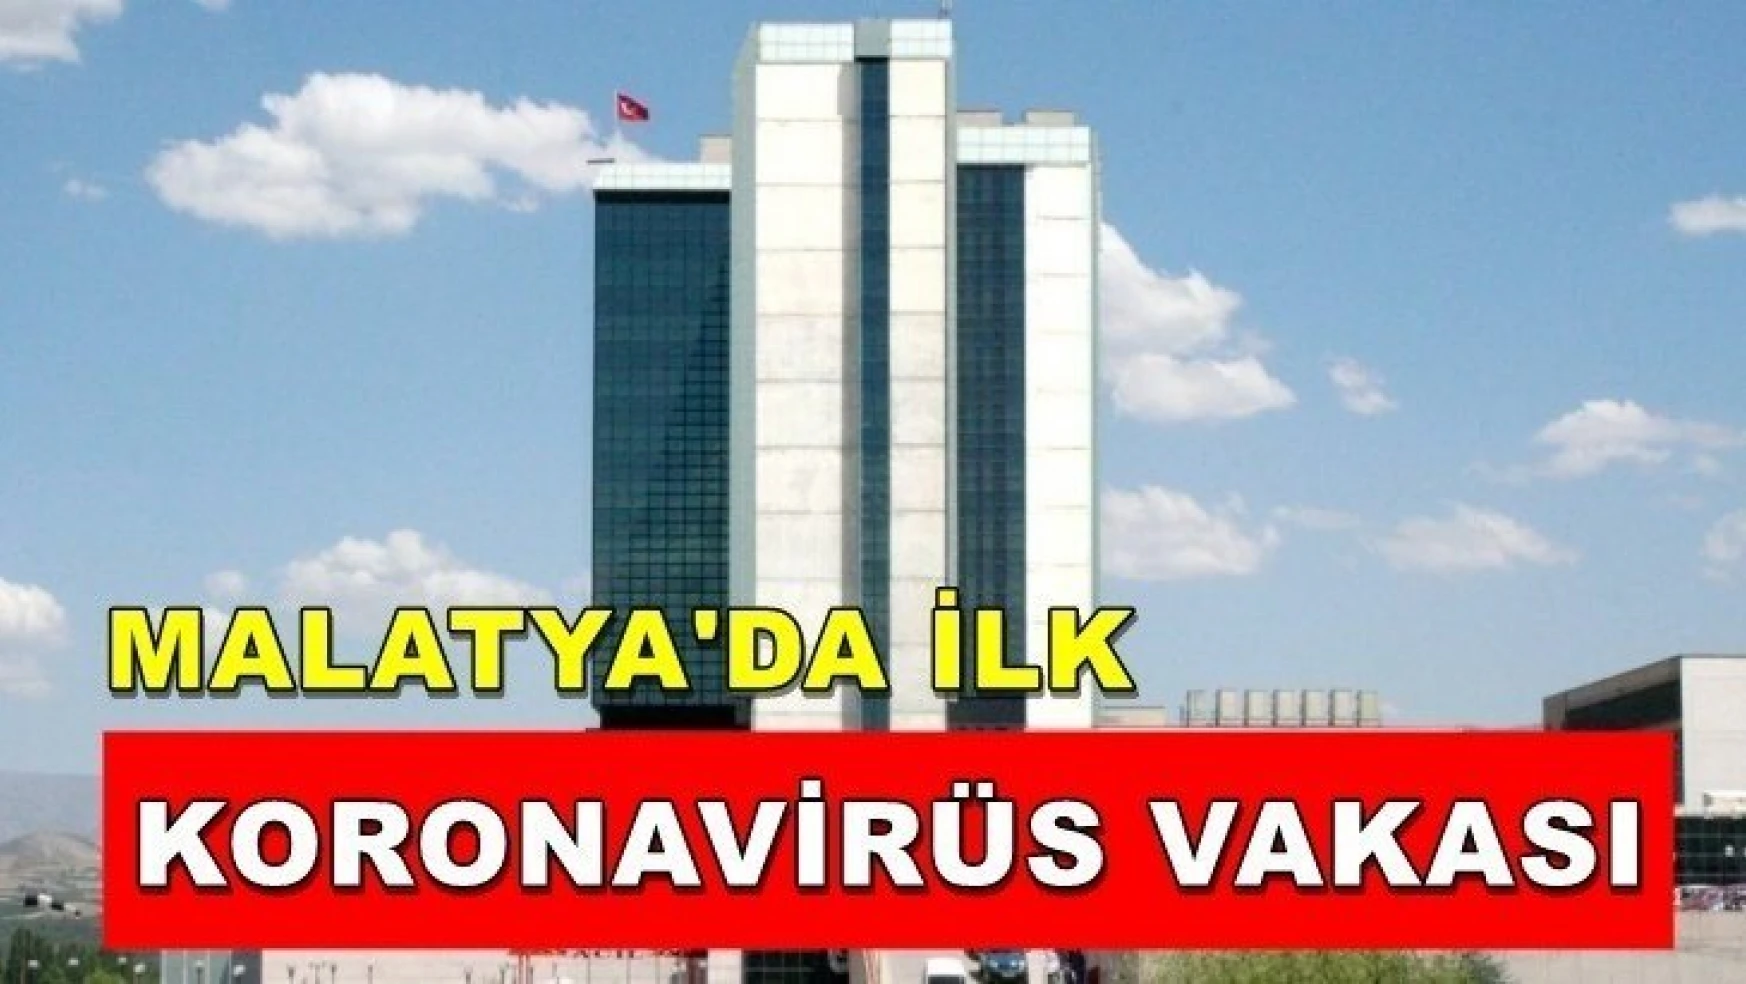 Malatya'da ilk Koronavirüs vakası